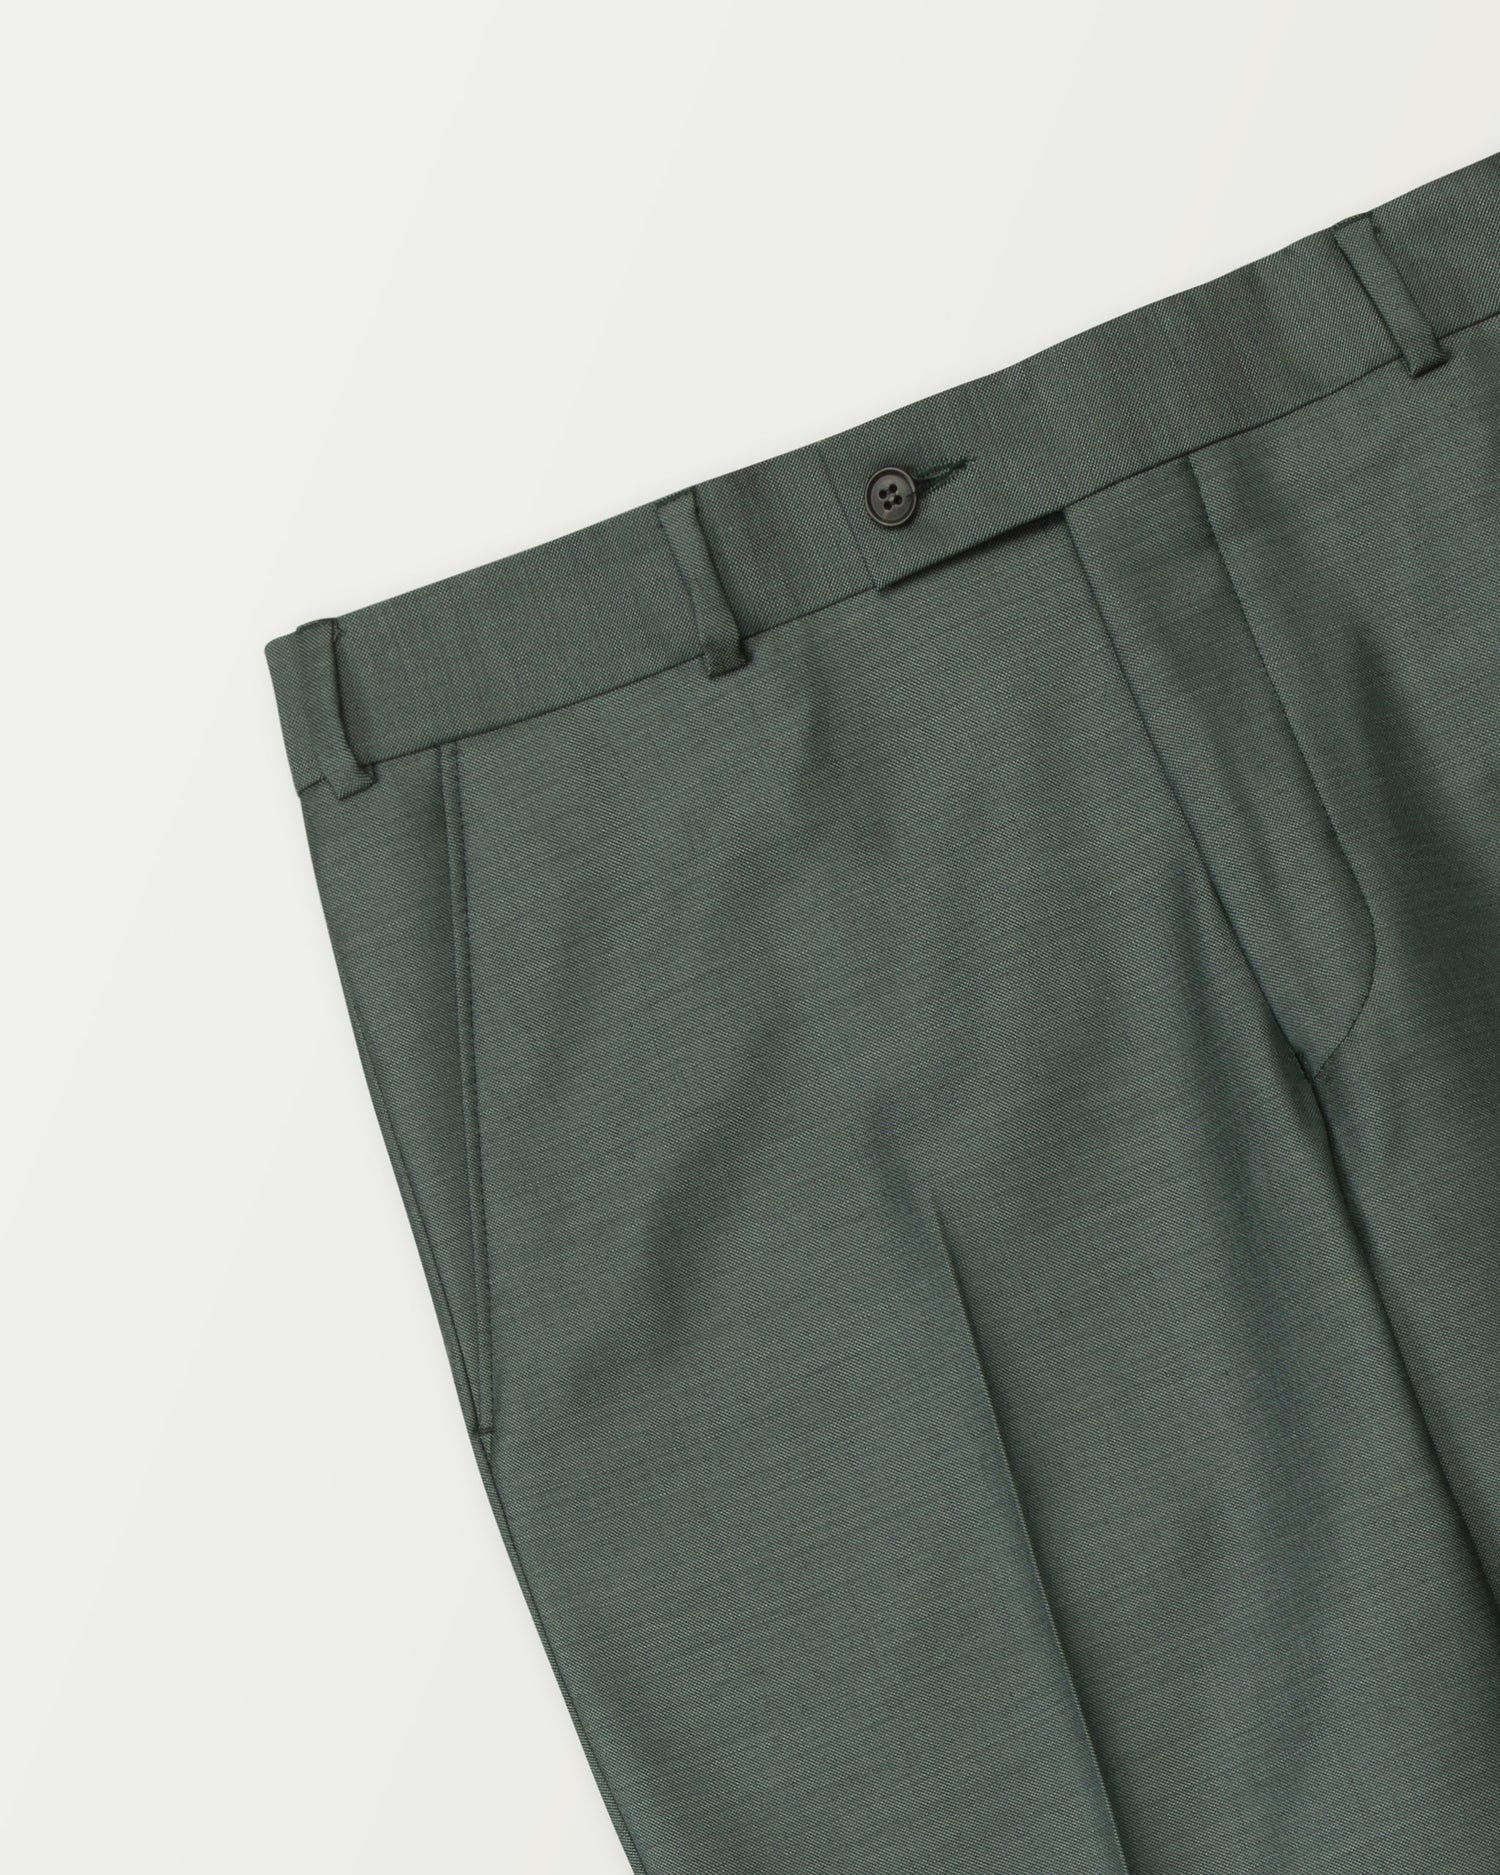 Green Premium Wool Trousers in Slim Fit (8636922167626)